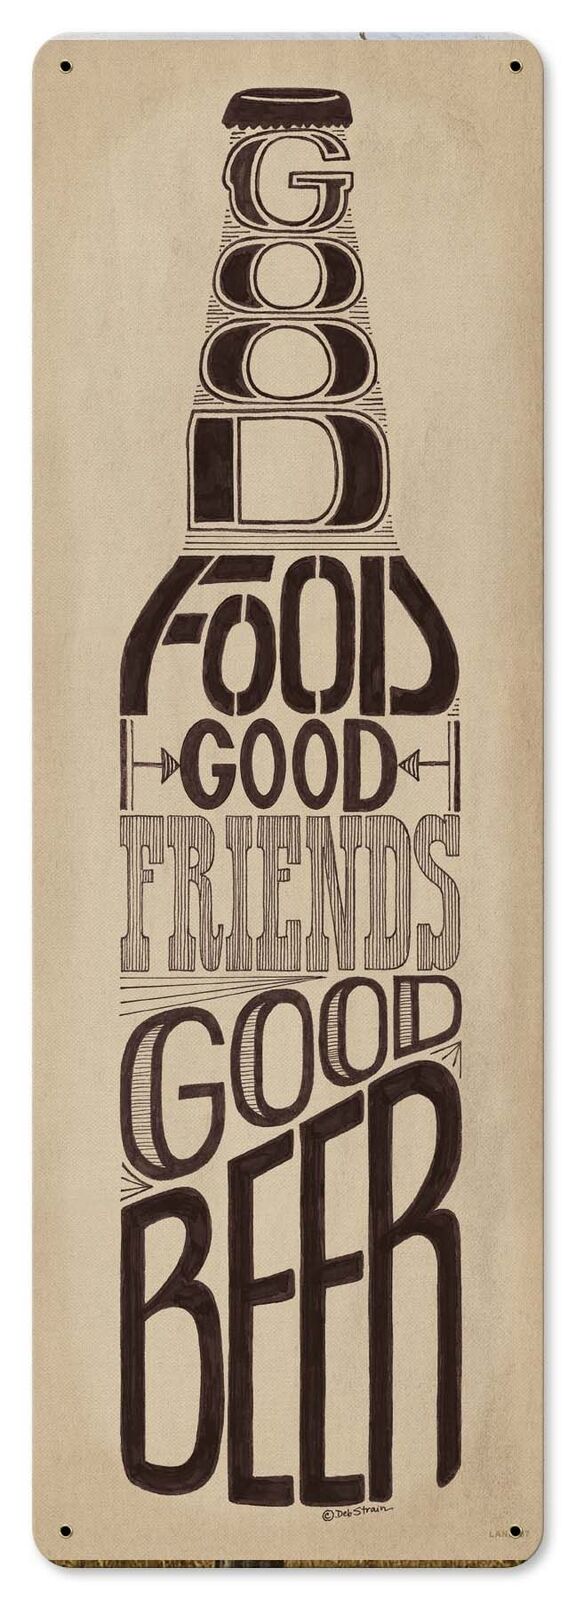 GOOD FOOD GOOD FRIENDS GOOD BEER 24